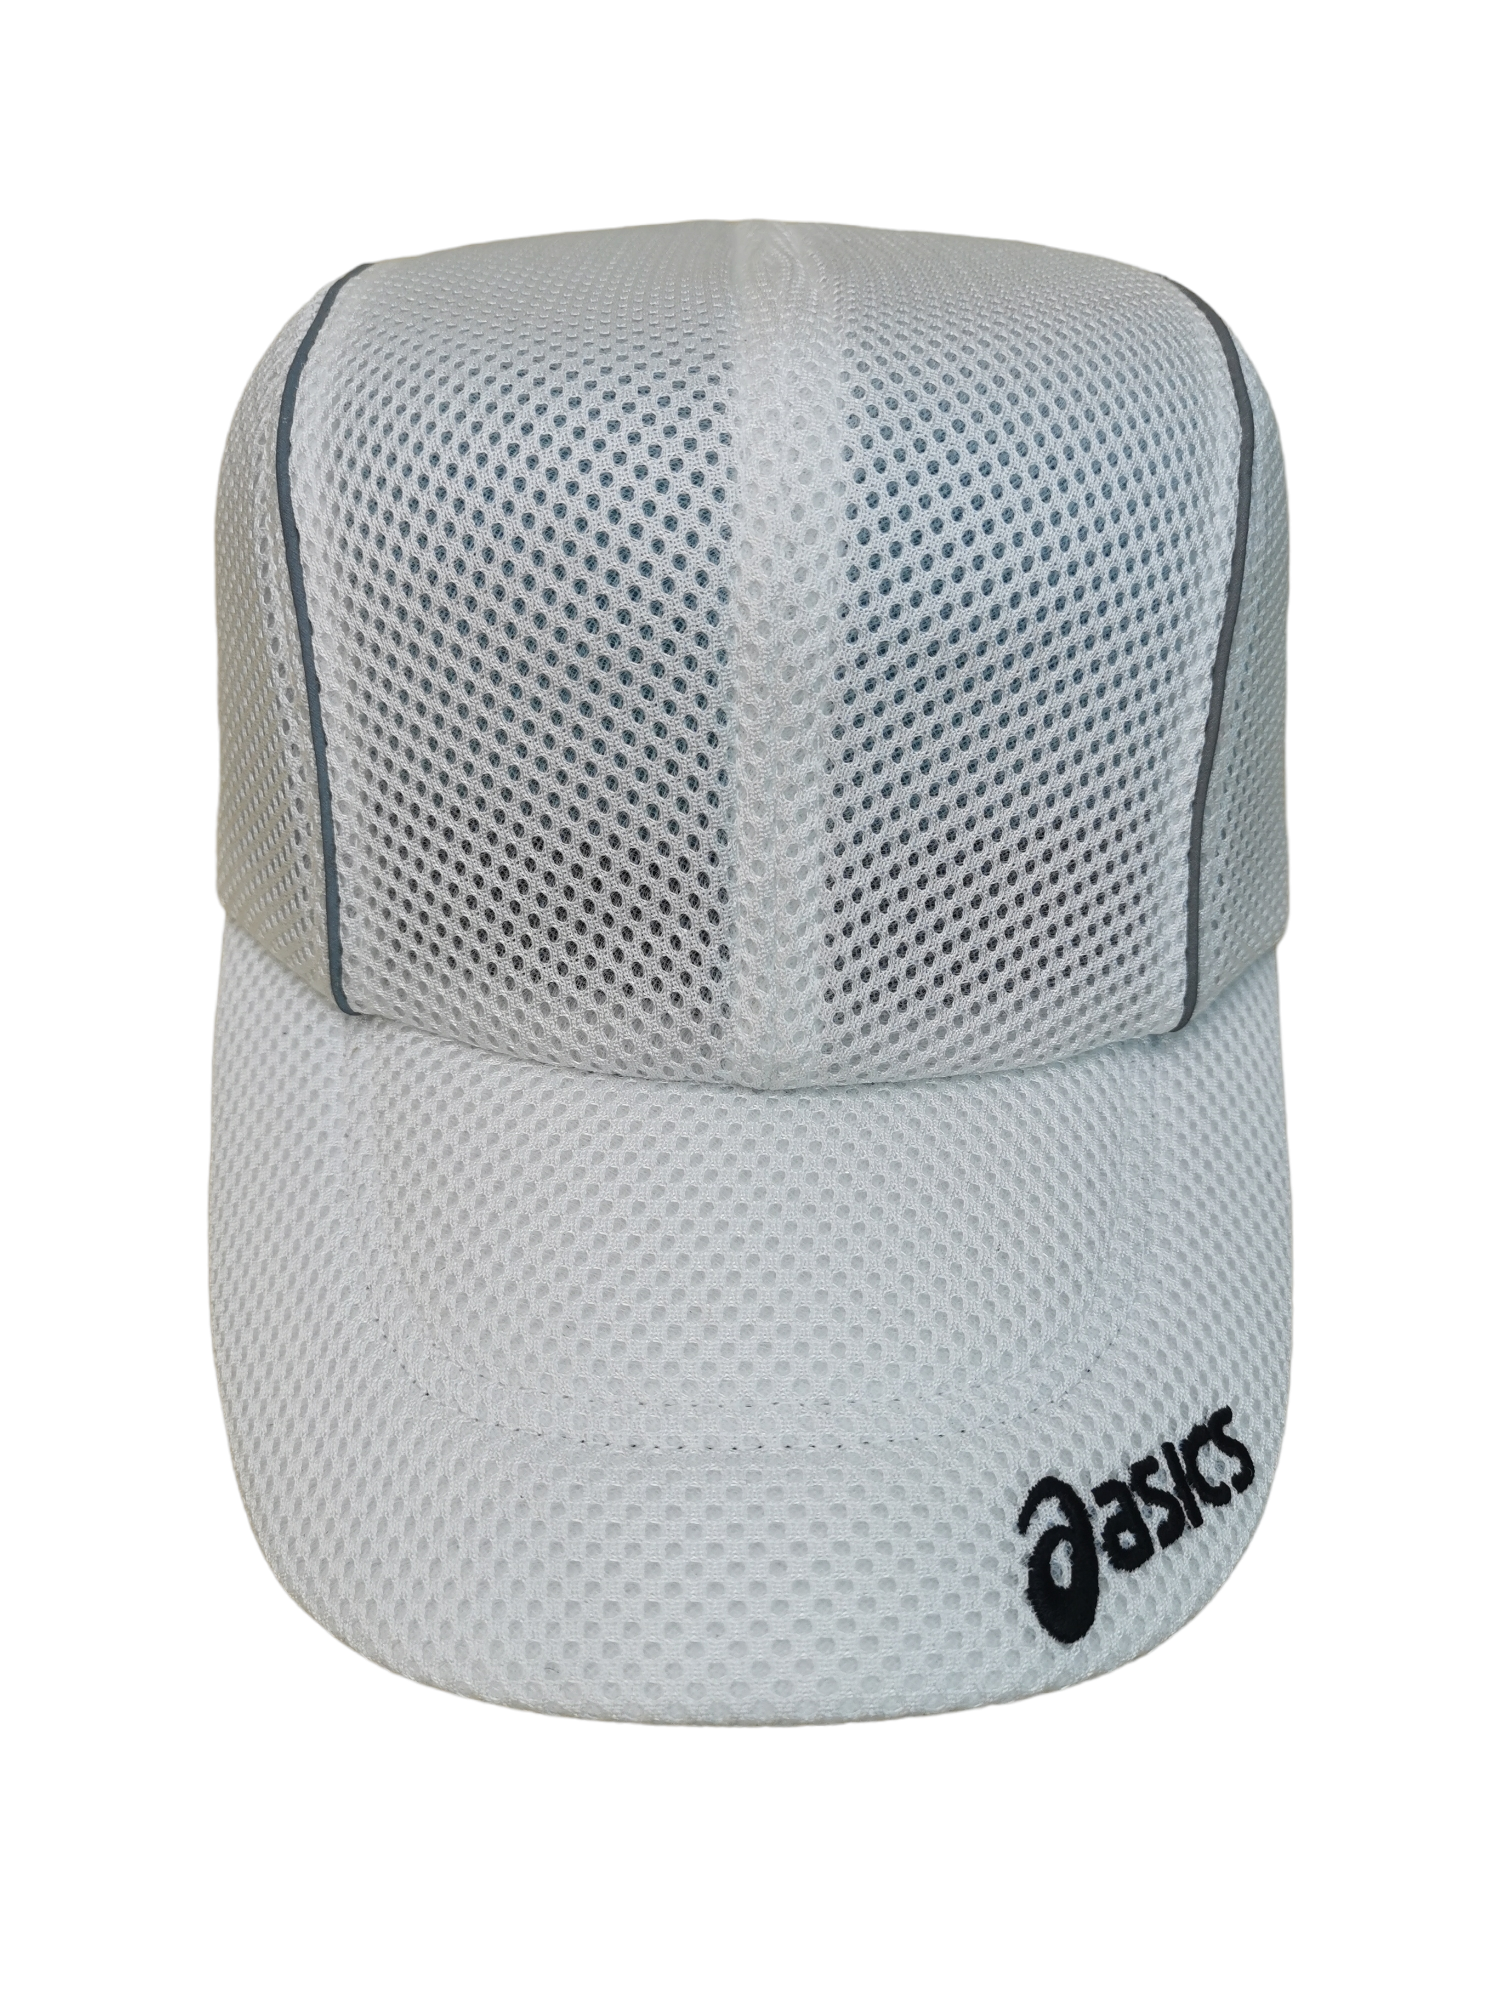 🔥FREE SHIPPING🔥 JAPANESE BRAND ASICS HAT CAP - 1